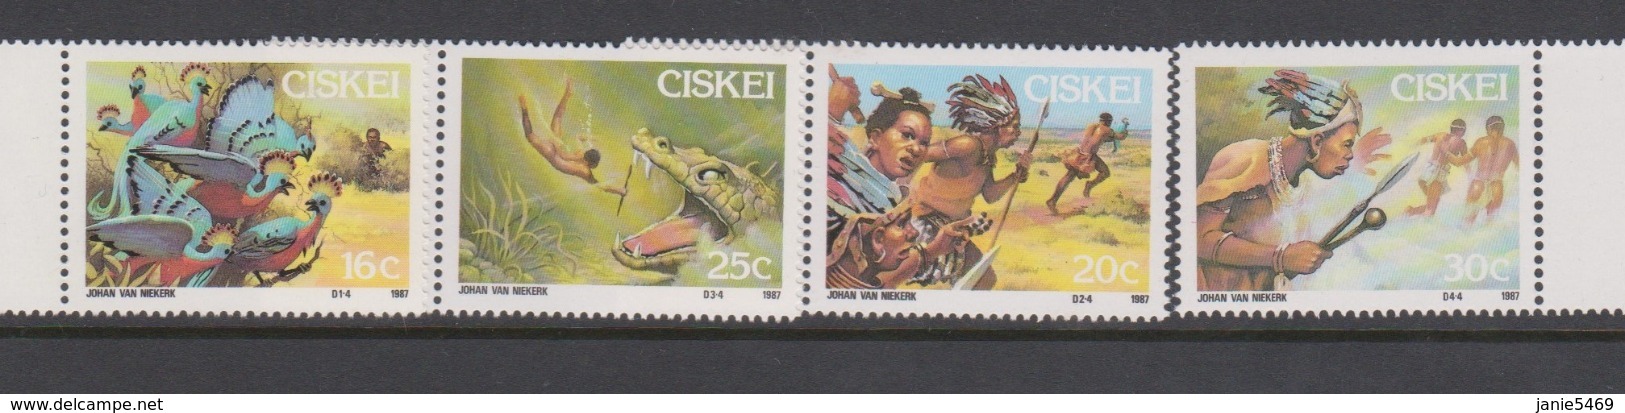 South Africa-Ciskei Scott 114-117 1987 Folklore,Mint Never Hinged - Ciskei